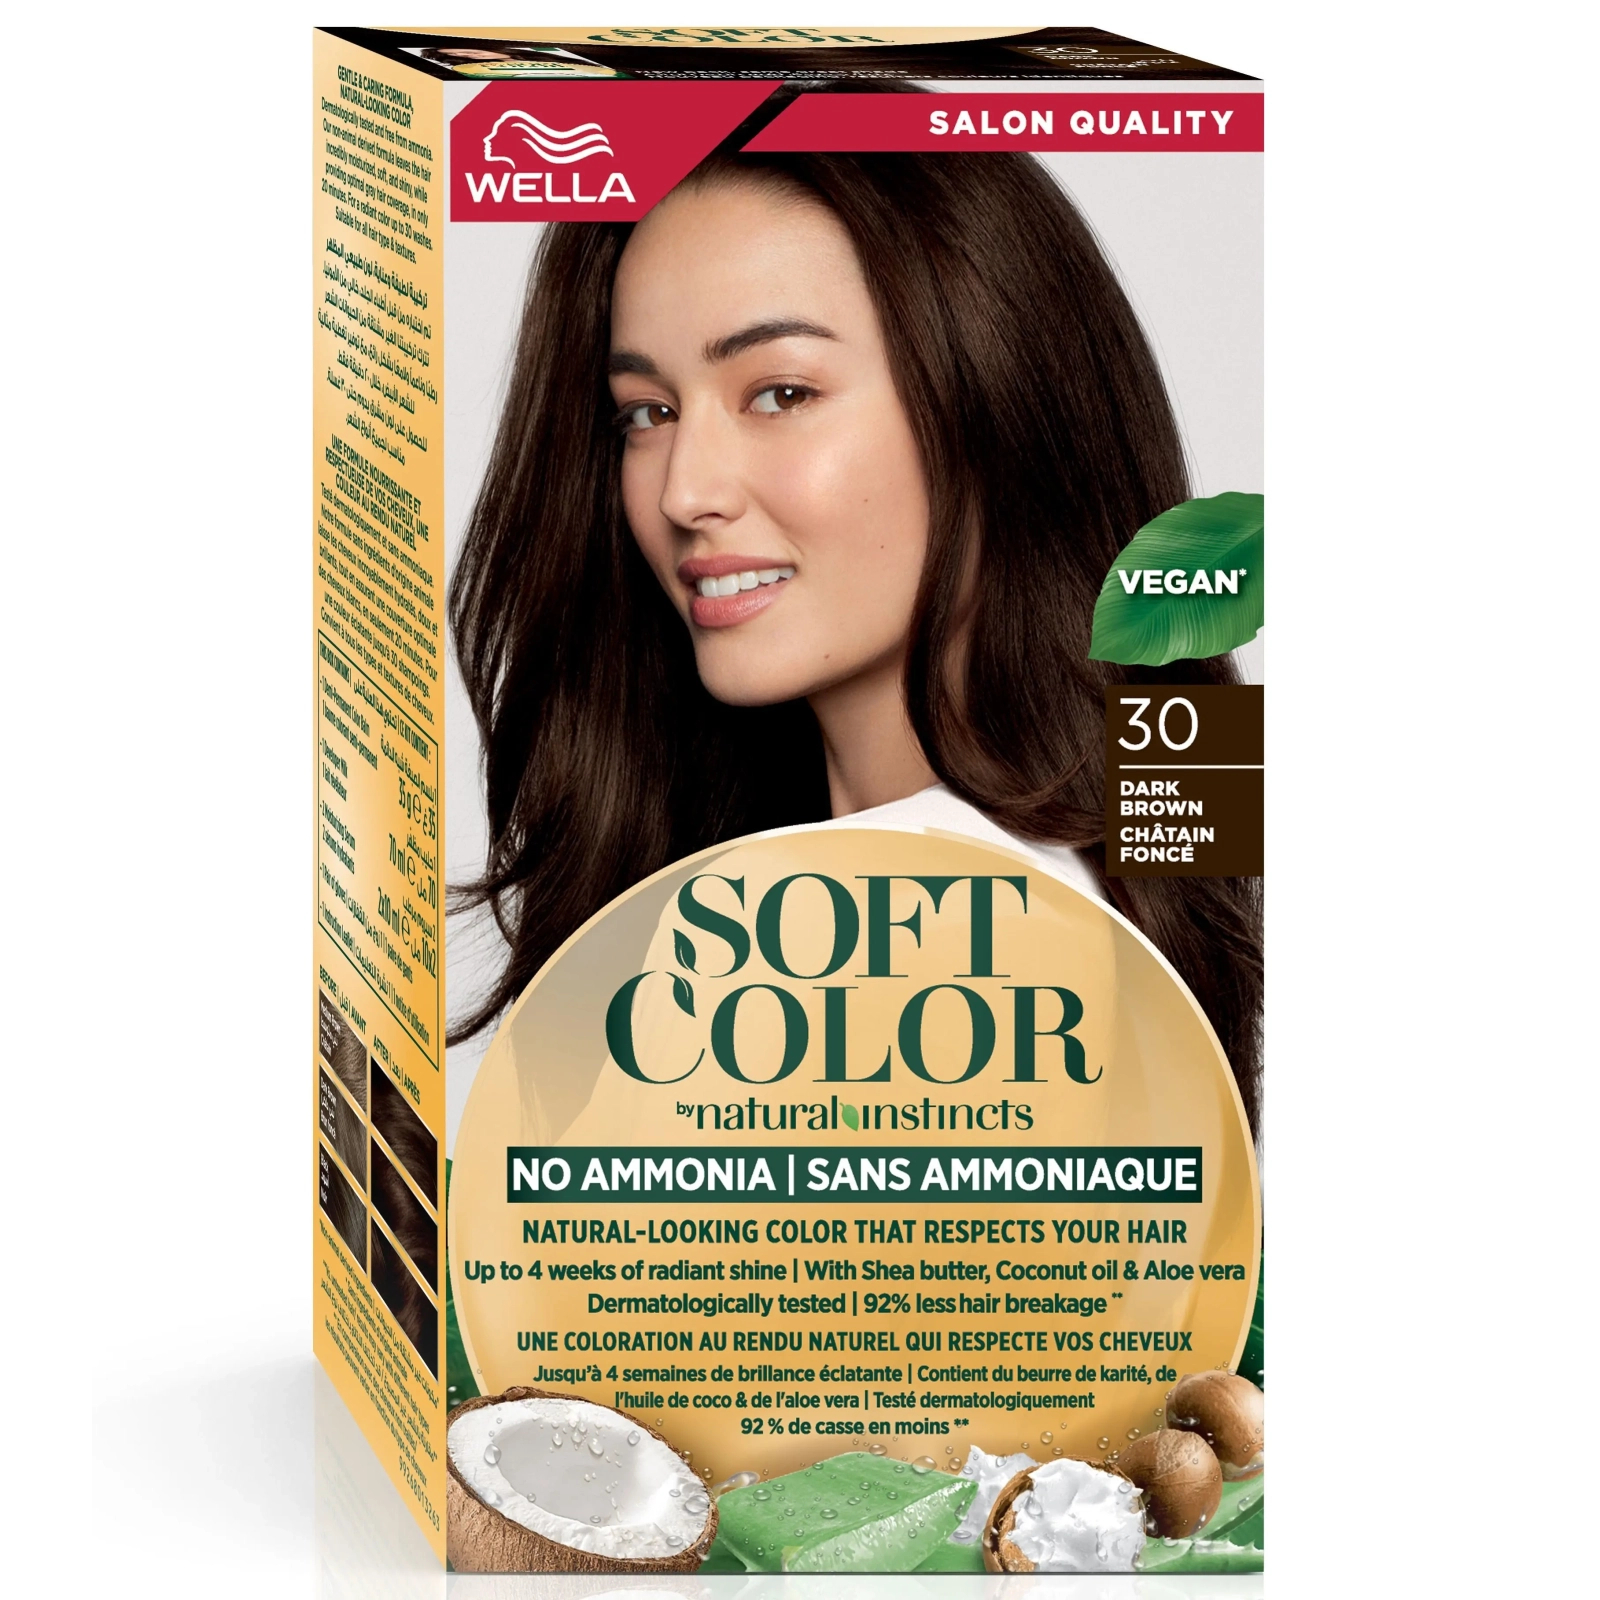 Краска для волос Wella Soft Color Безаммиачная 67 - Шоколад (3614228865791)